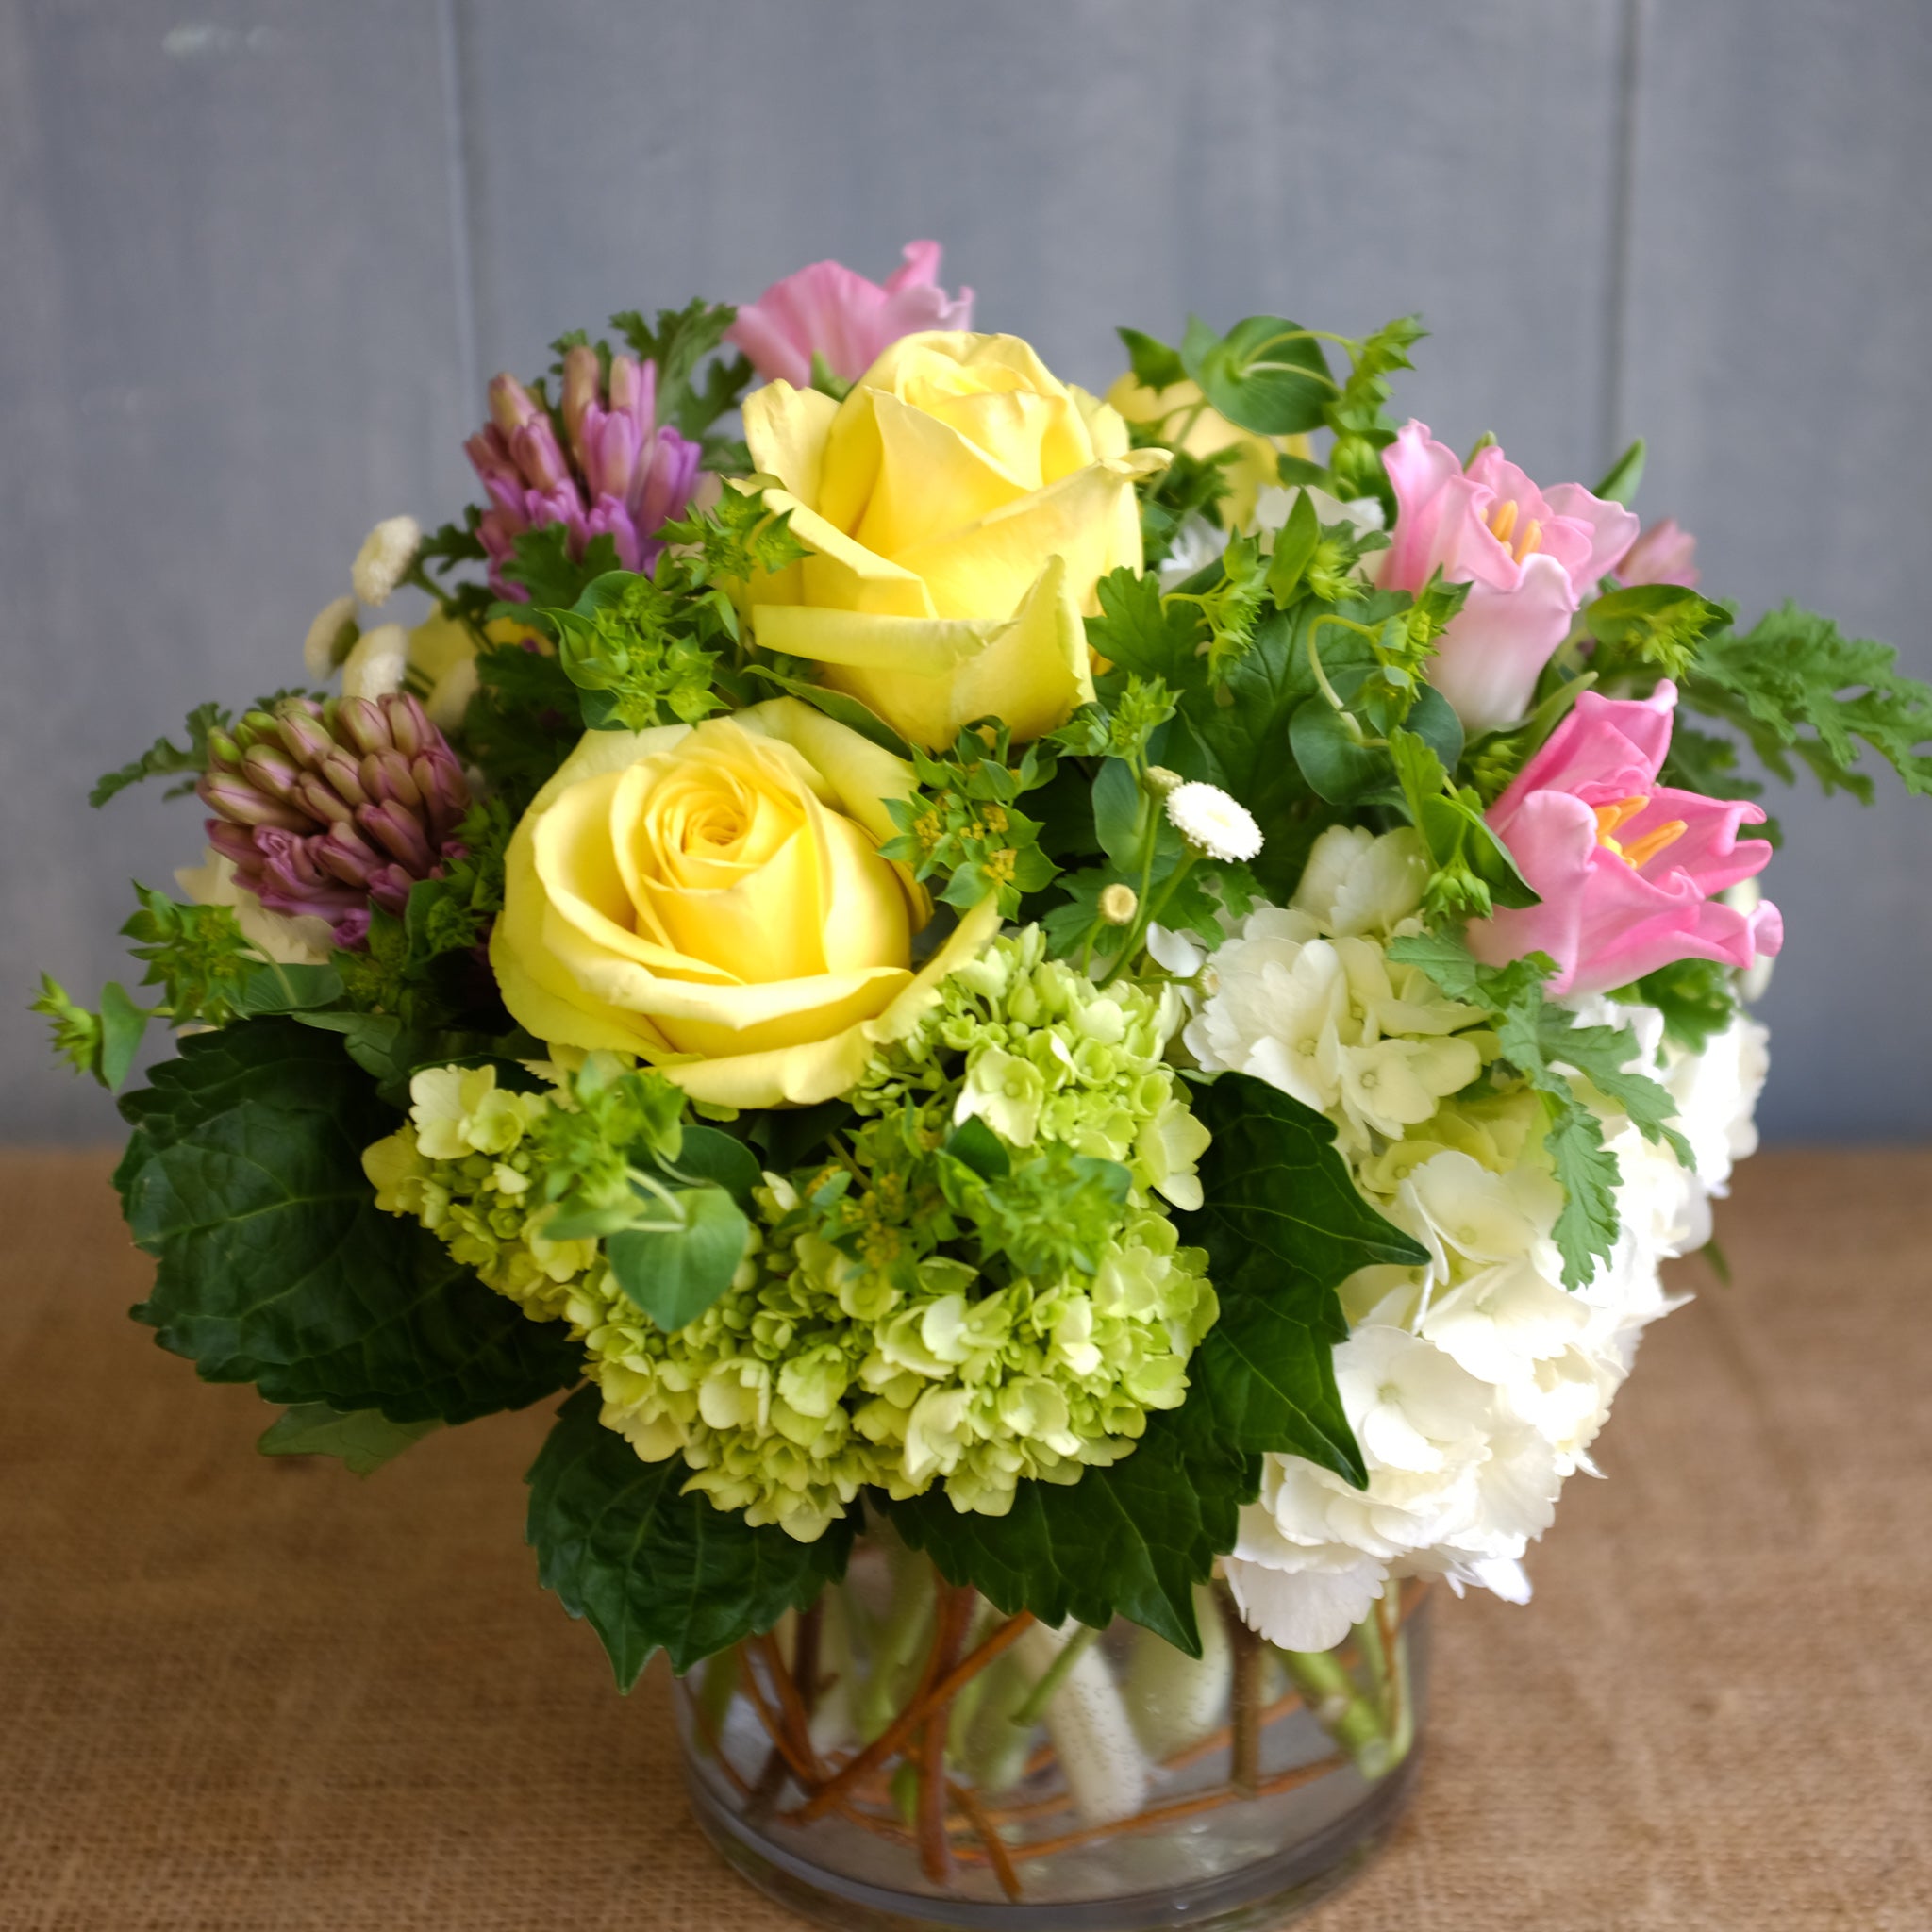 Flower bouquet by Michlers Florist,